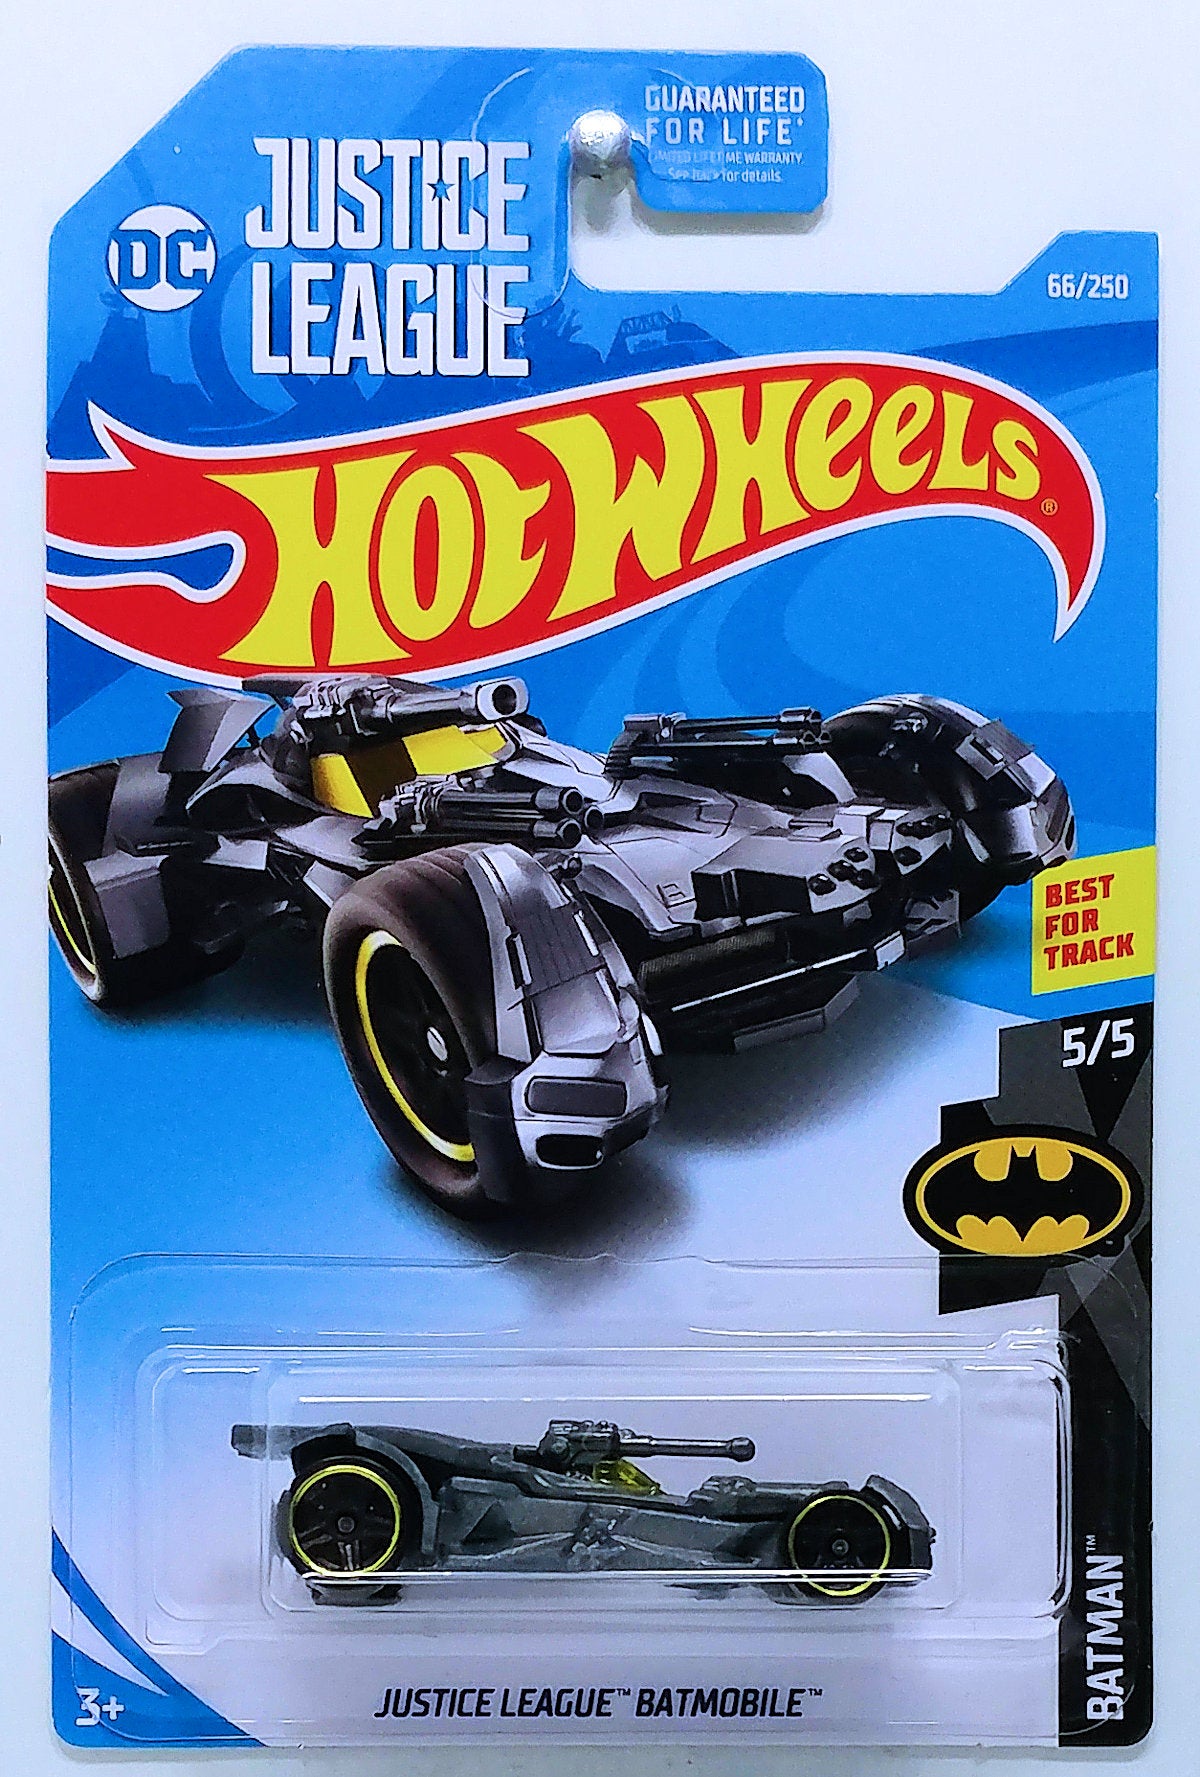 Hot Wheels 2019 - Collector # 066/250 - Batman 5/5 - Justice League Batmobile - Gray - USA Card with 'DC Justice League'